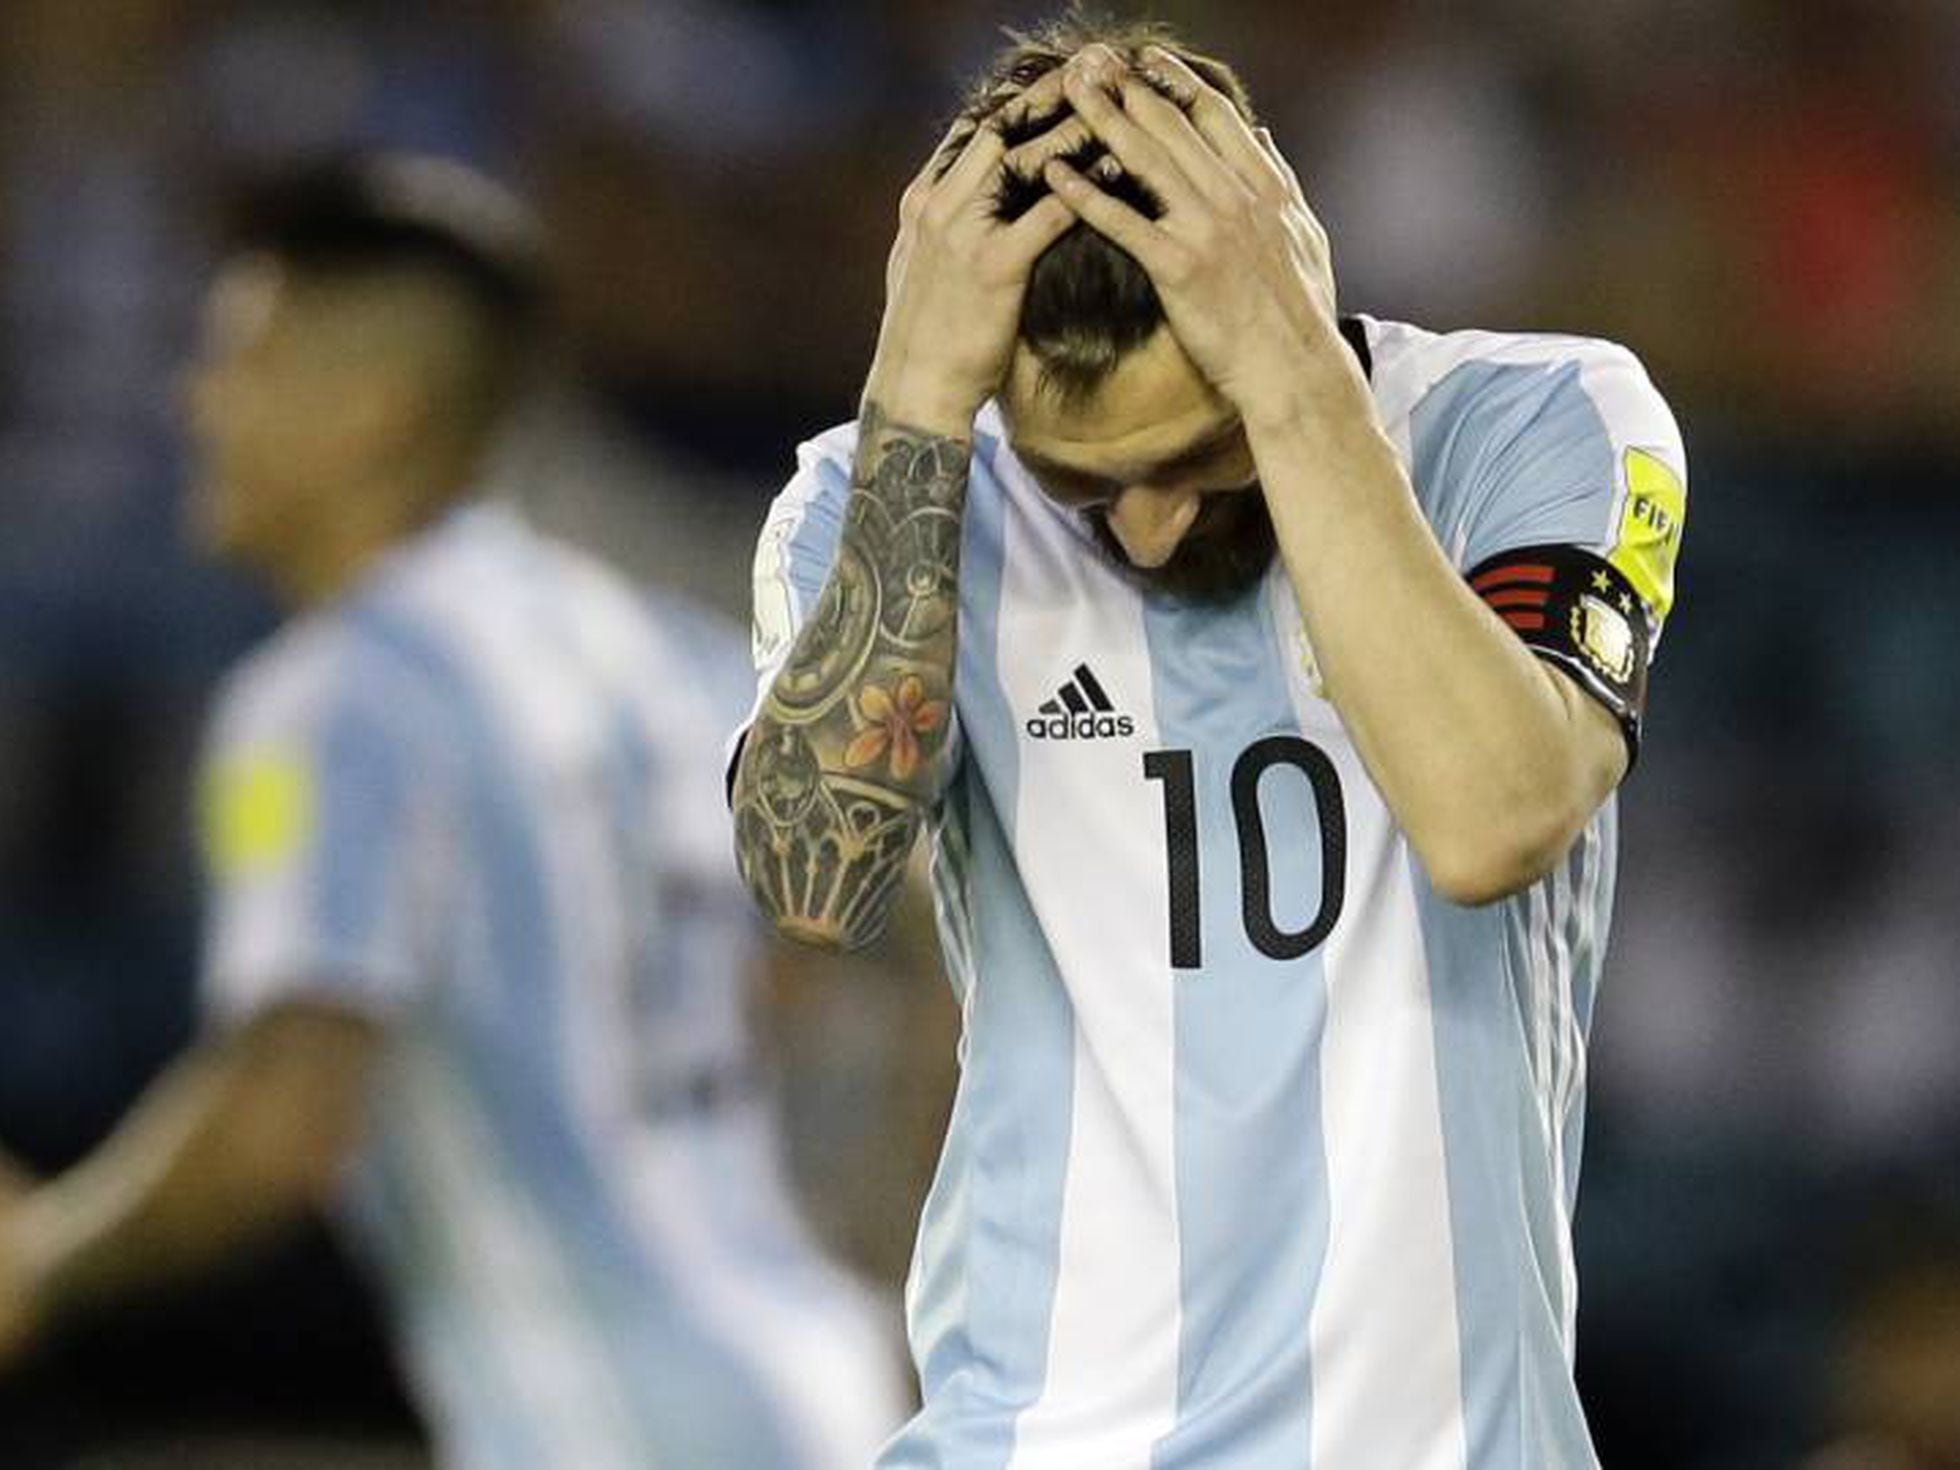 Argentina na Copa 2018: Como a Argentina acredita ter encontrado